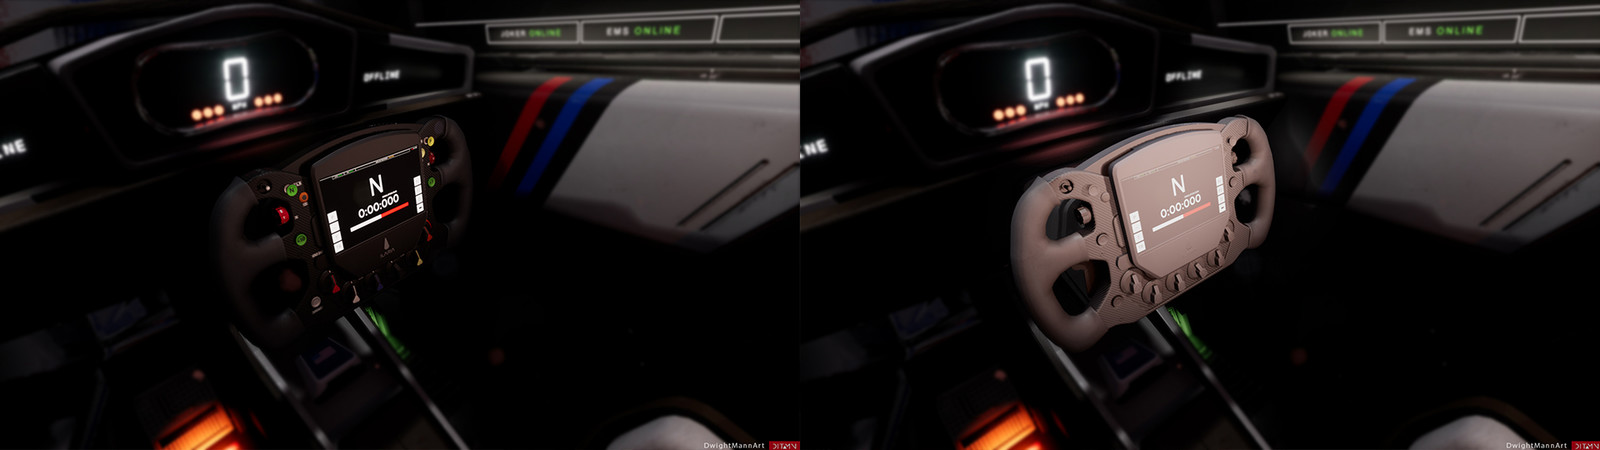 Race Steering Wheel - Devin Hipp. https://www.artstation.com/artwork/3xJ2E
Display node attachment &amp; Driver UI (Functional) - Myself